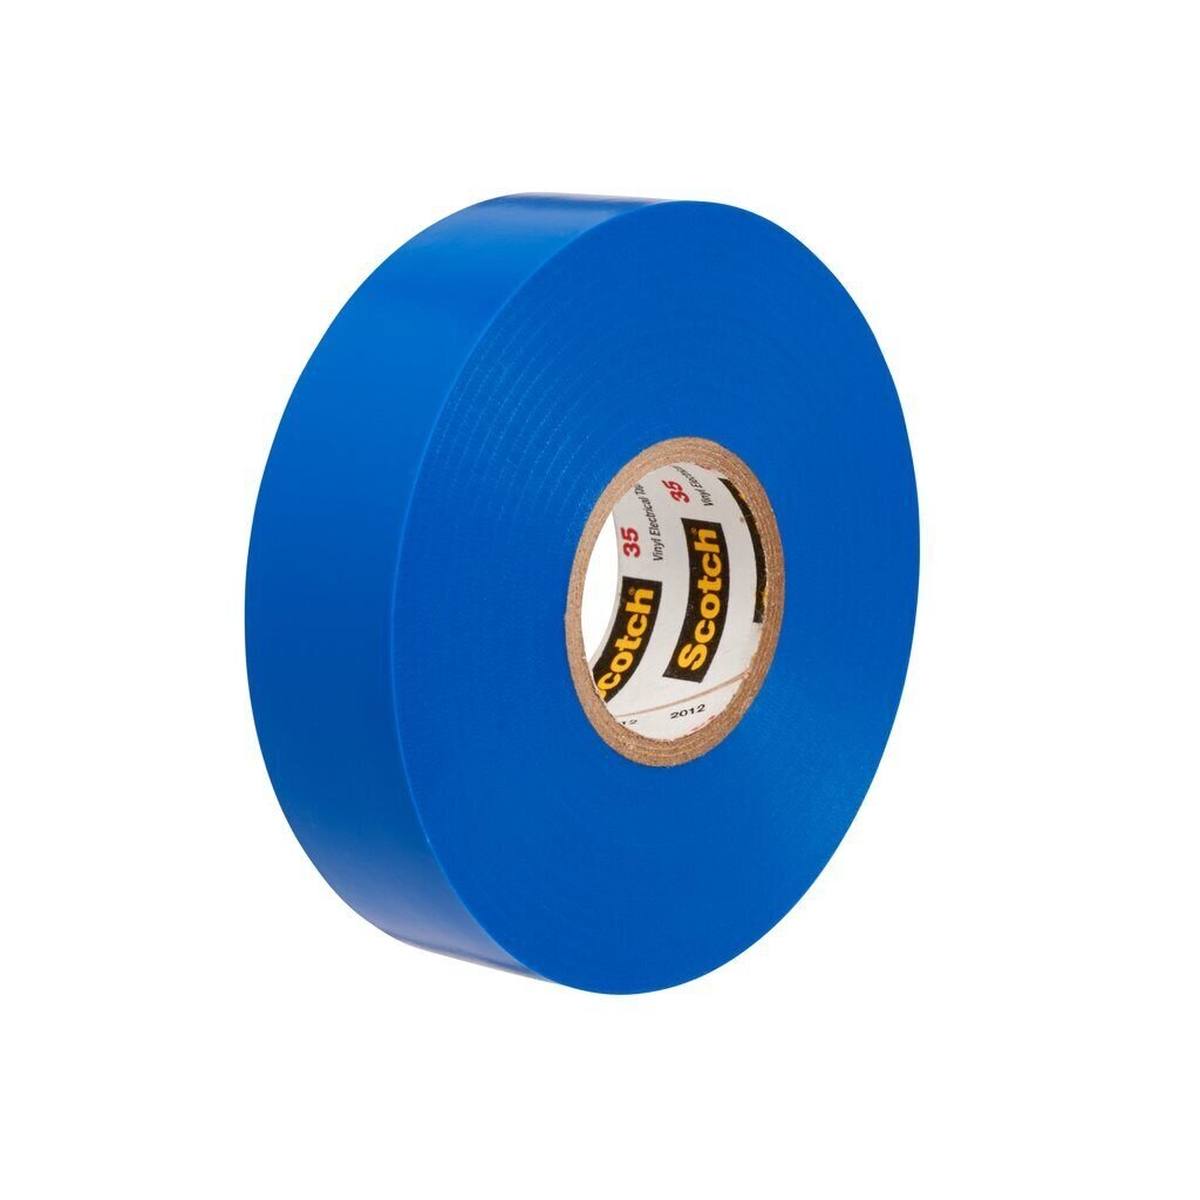 3M Scotch 35 vinyl electrical insulating tape, blue, 19 mm x 20 m, 0.18 mm